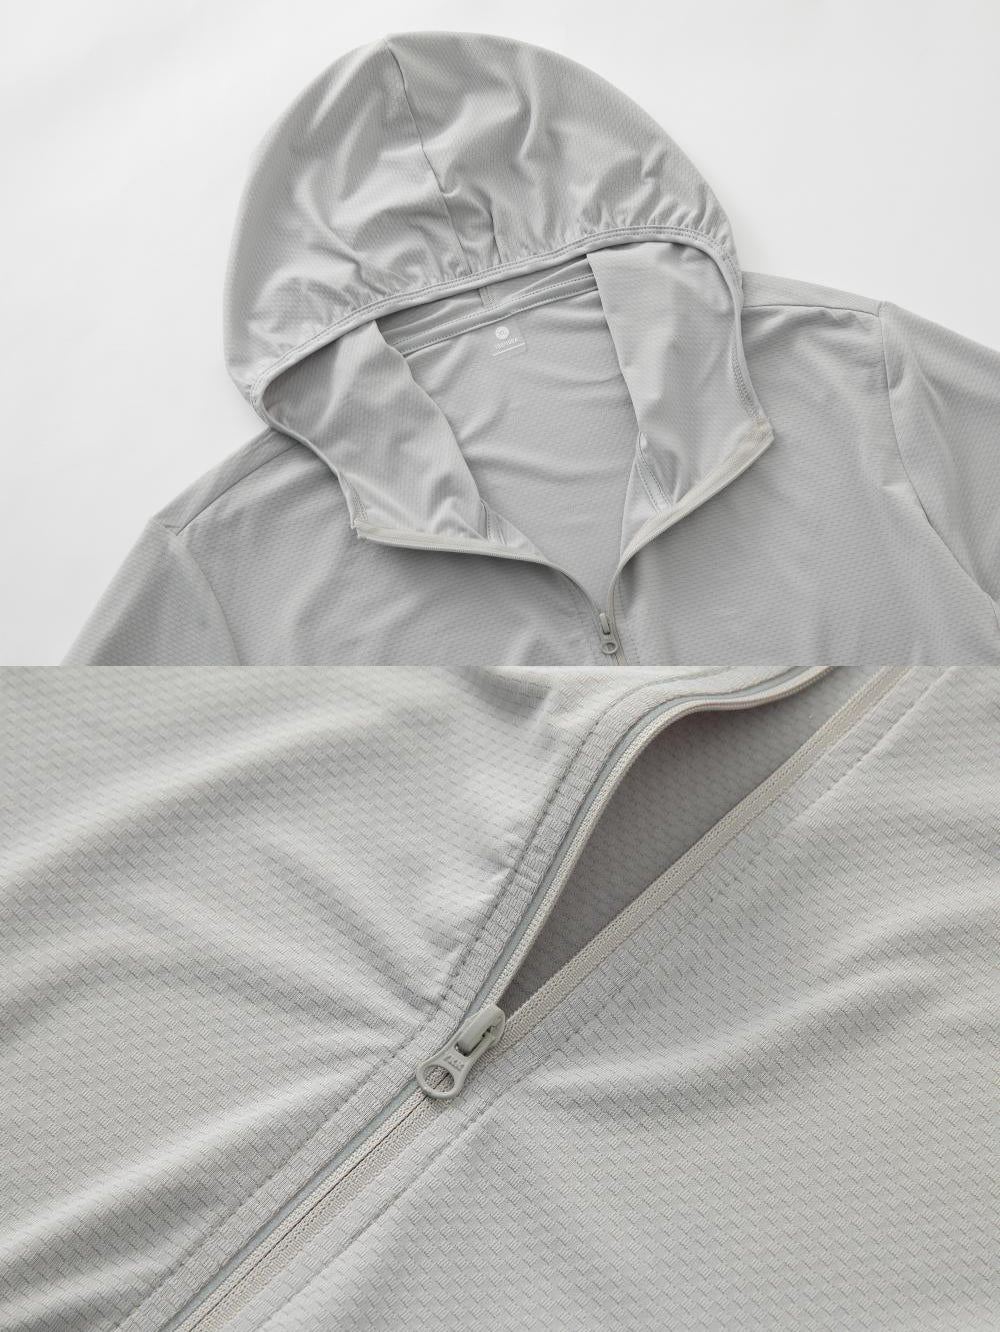 JK819 - Unisex Knitted Sun Protection Hooded Jacket Windproof Skin Coat